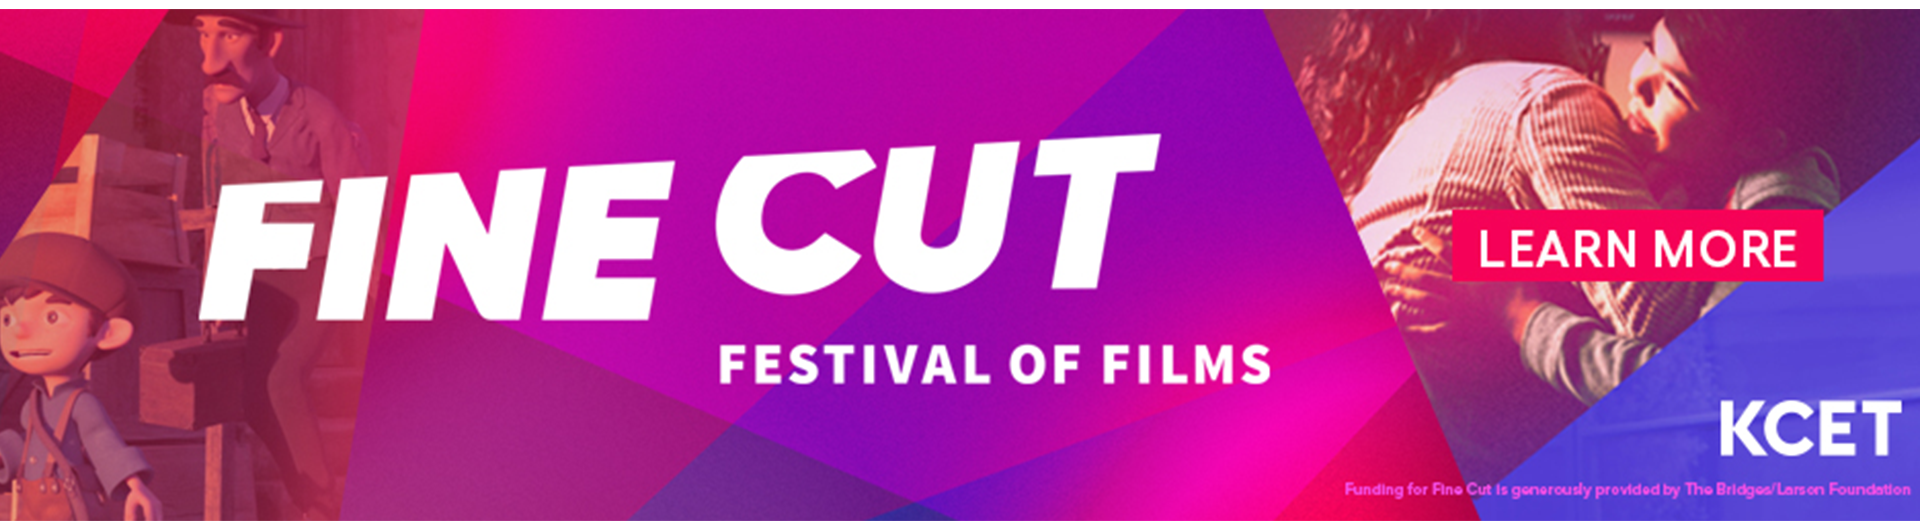 KCET Fine Cut Festival of Films